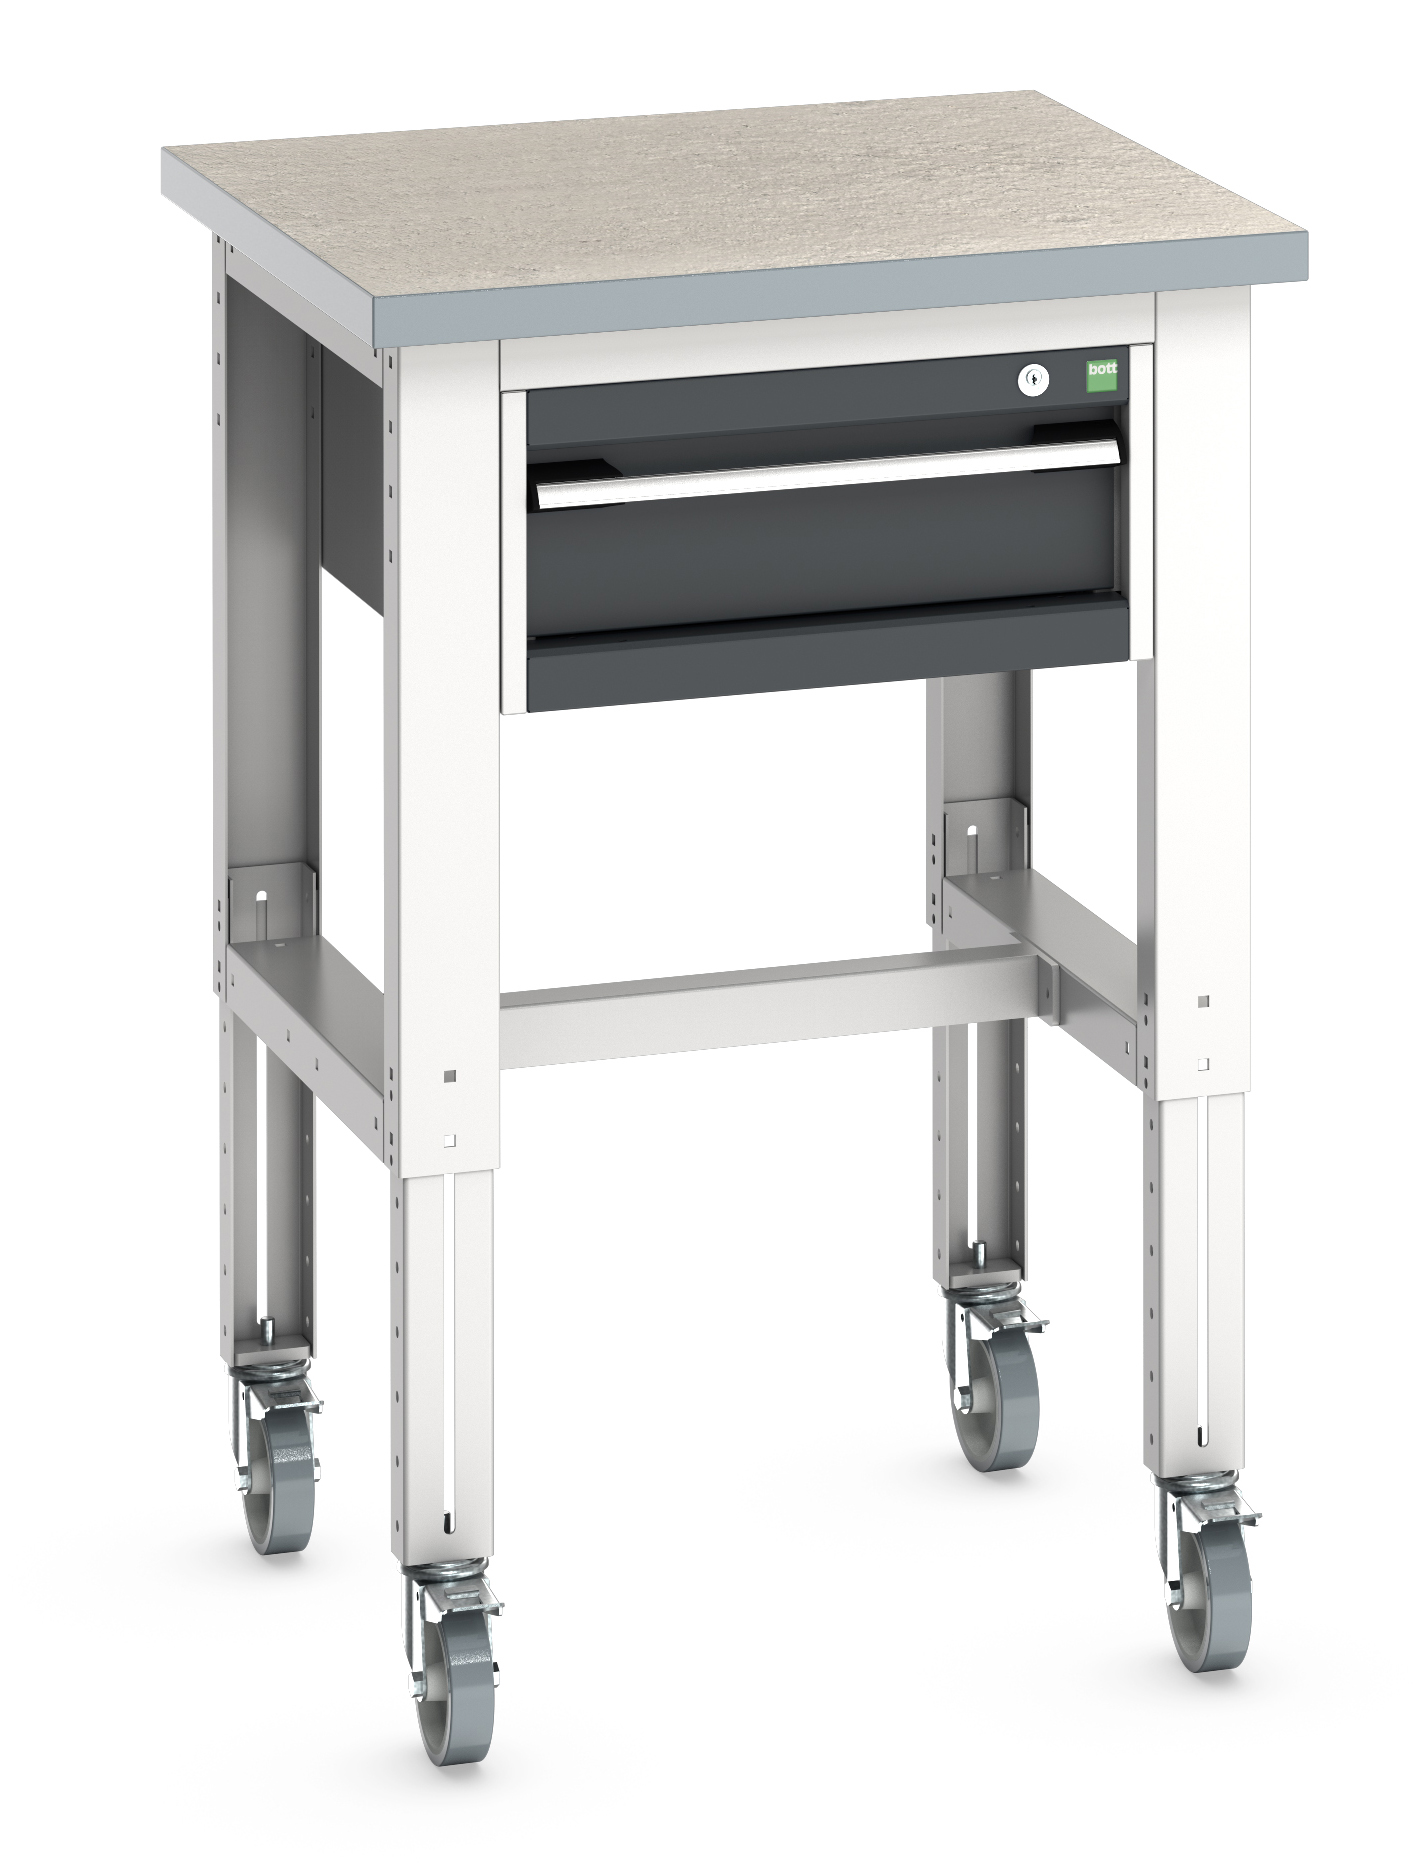 Bott Cubio Adjustable Height Mobile Workstand With 1 Drawer Cabinet - 41003273.19V